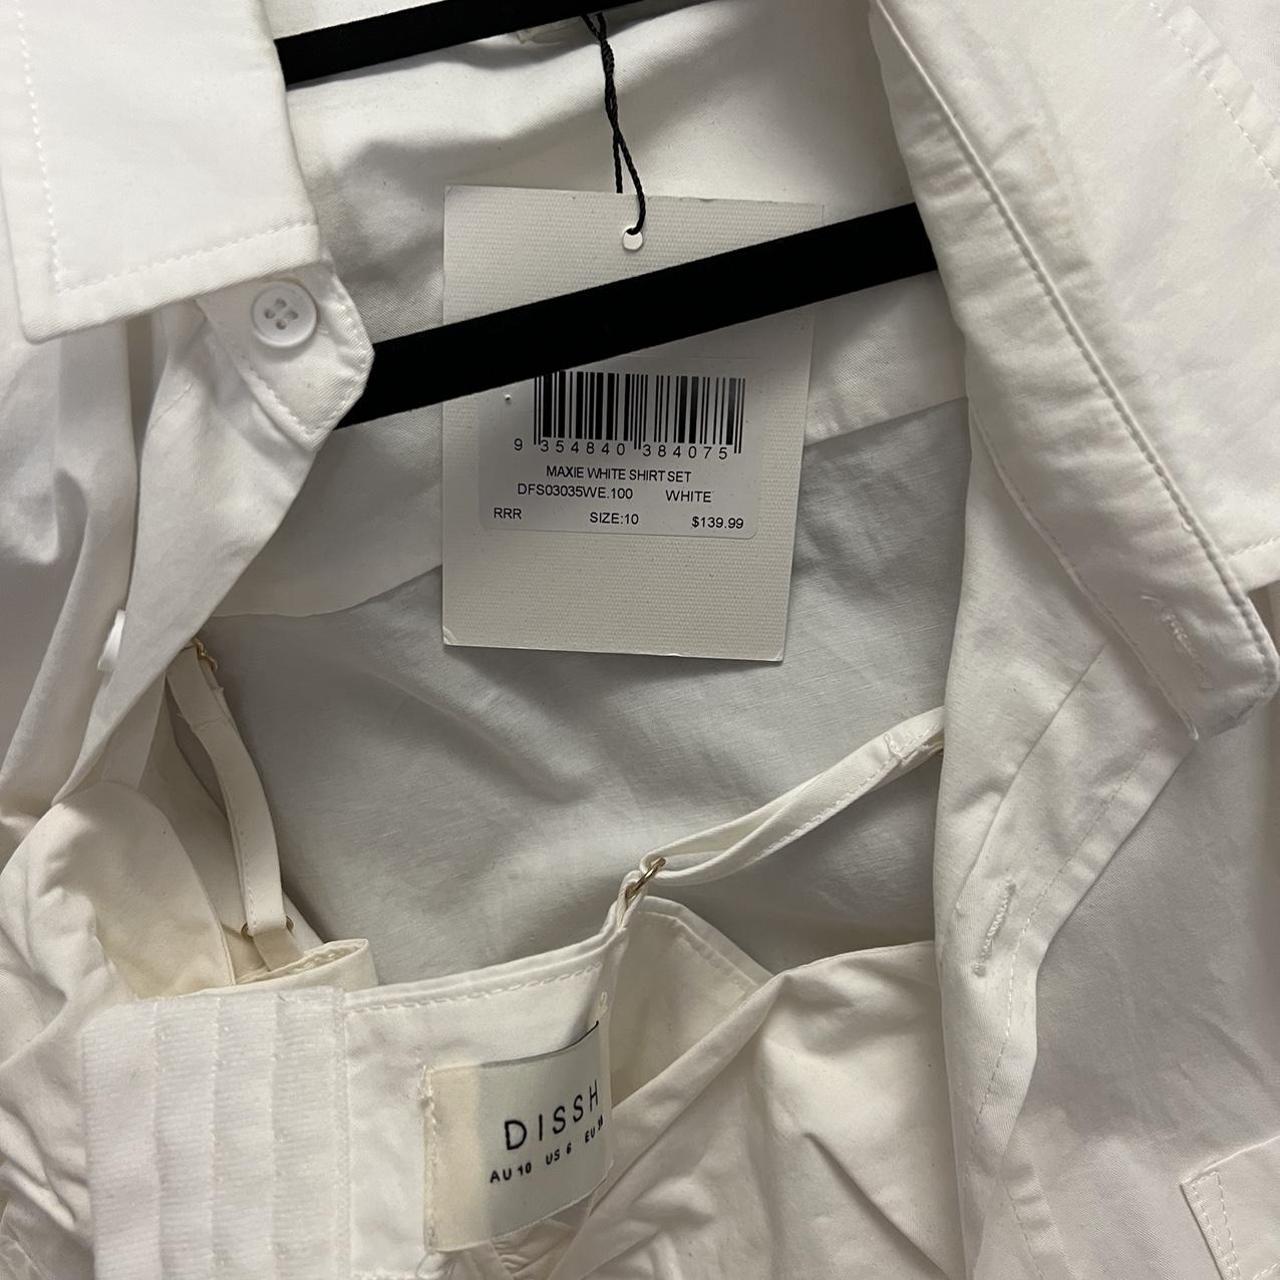 Dissh MAXIE WHITE SHIRT Size 10 available White... - Depop